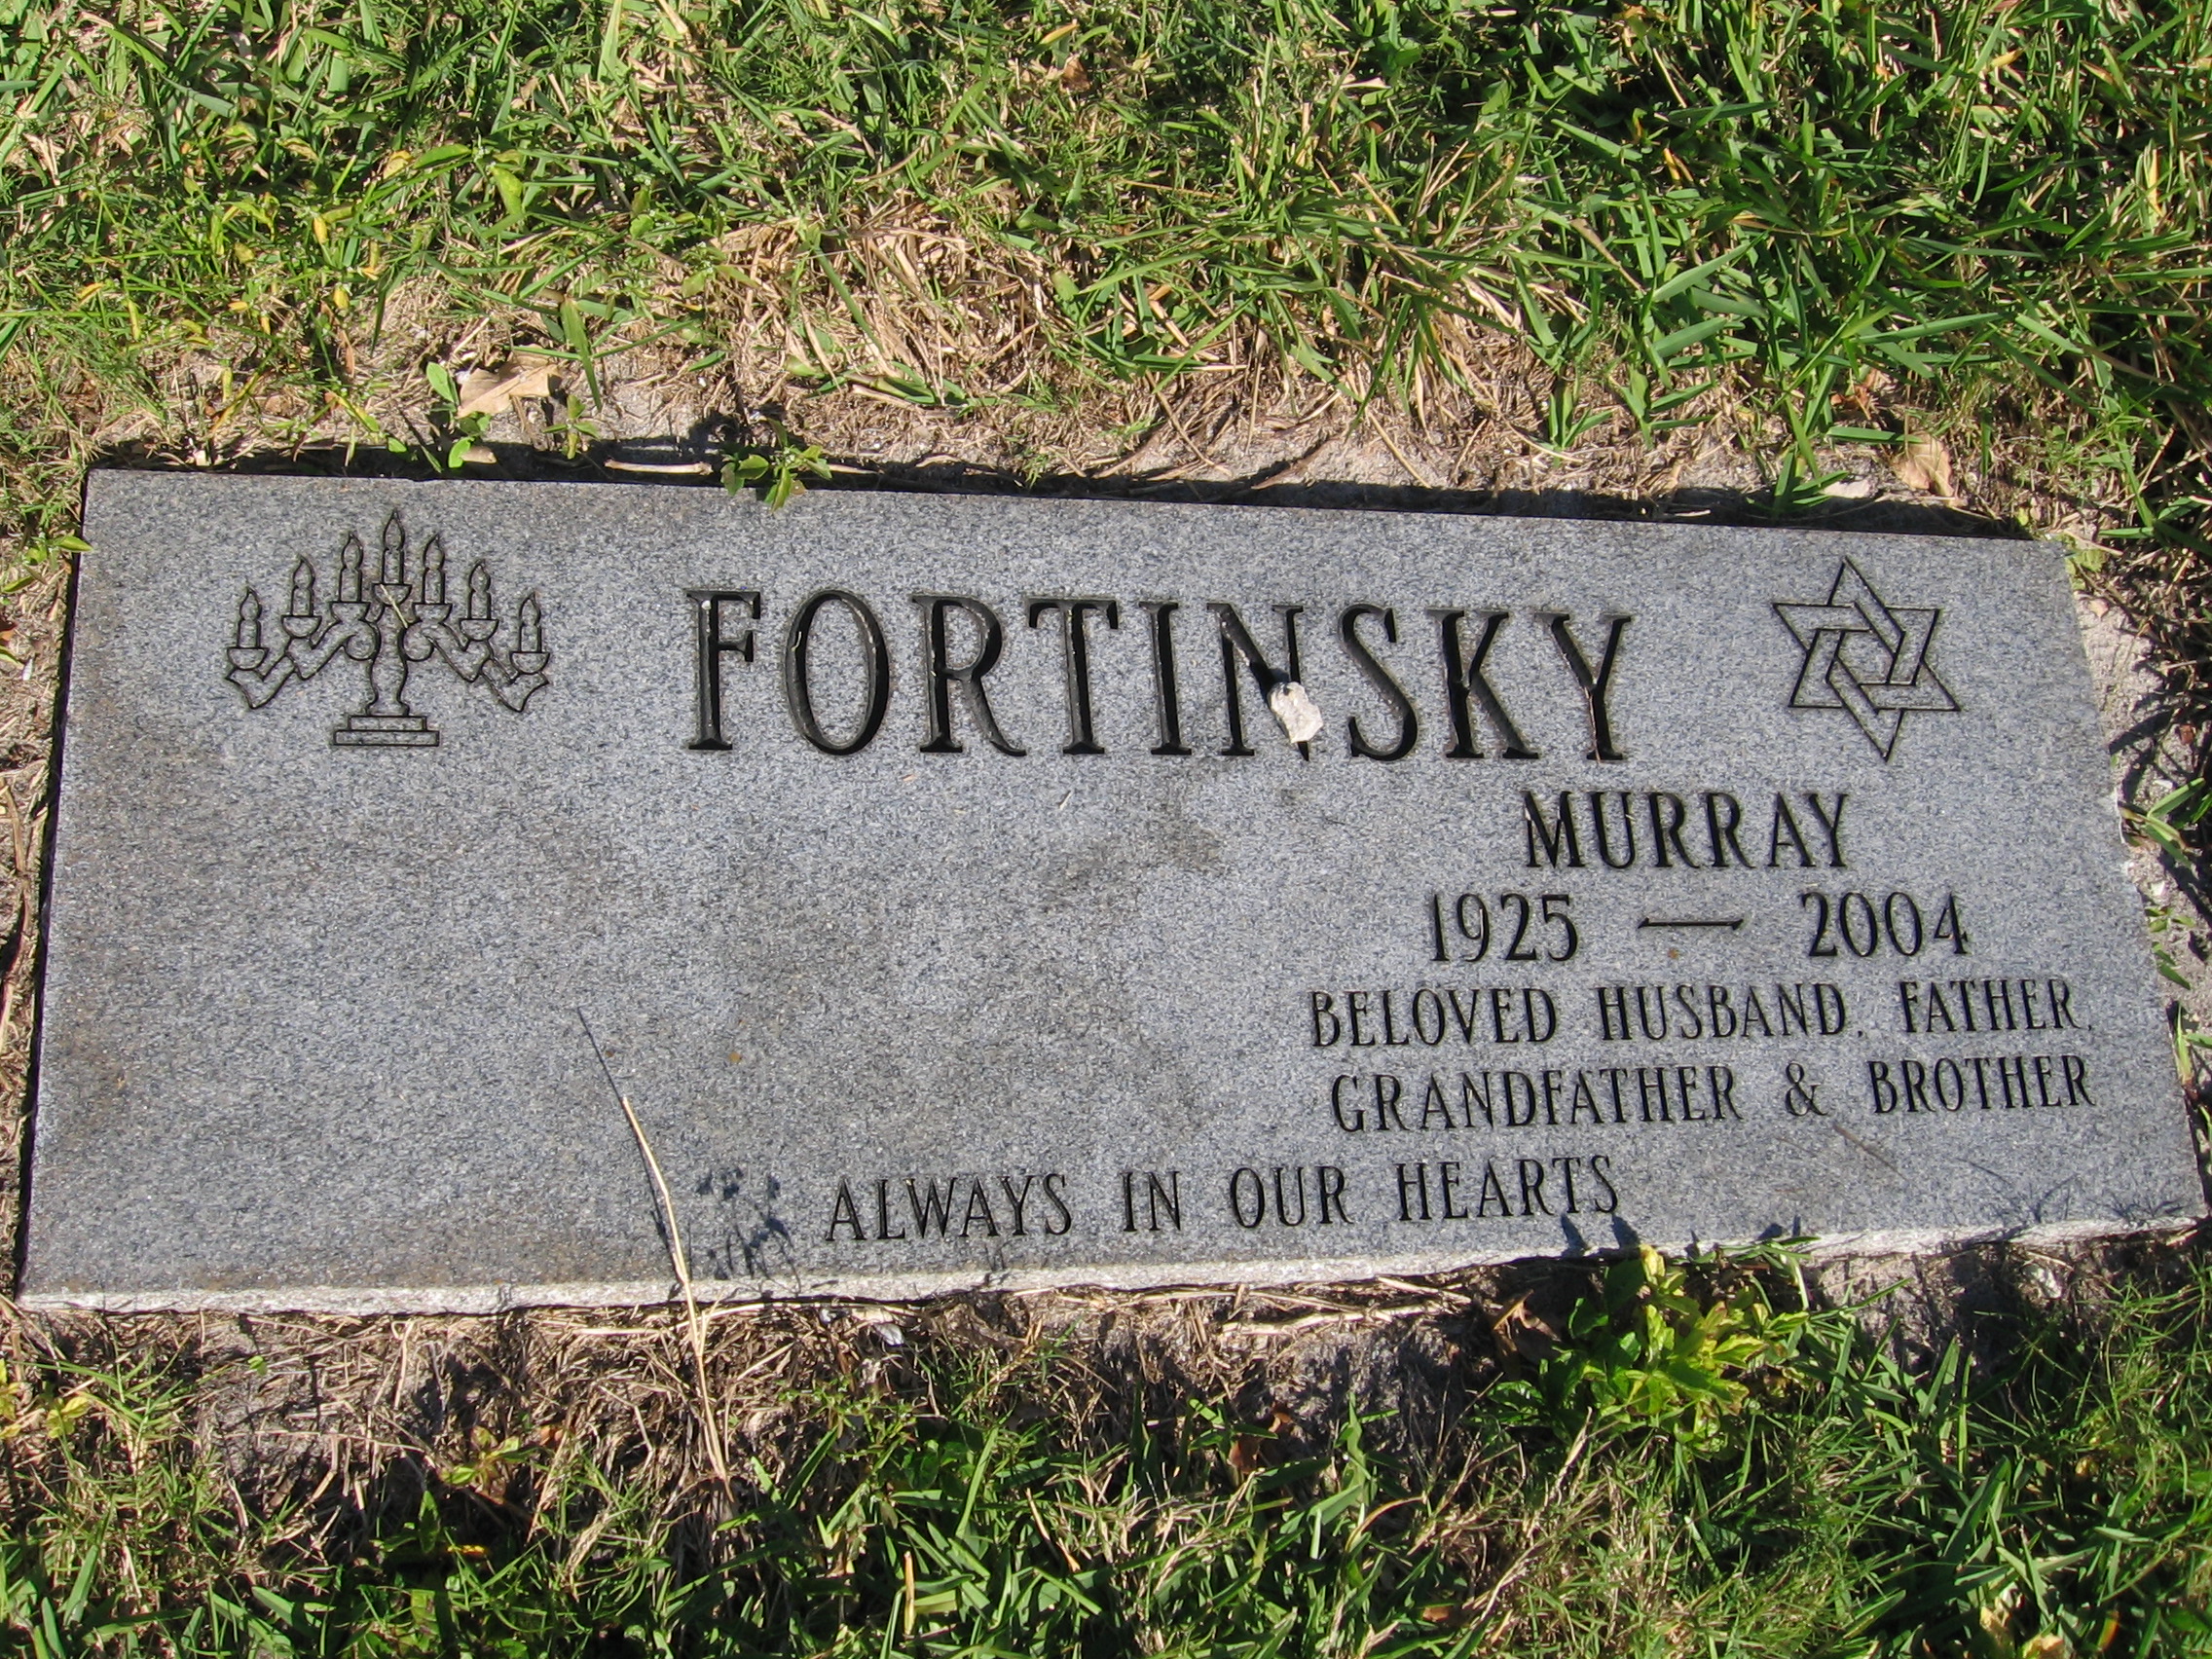 Murray Fortinsky